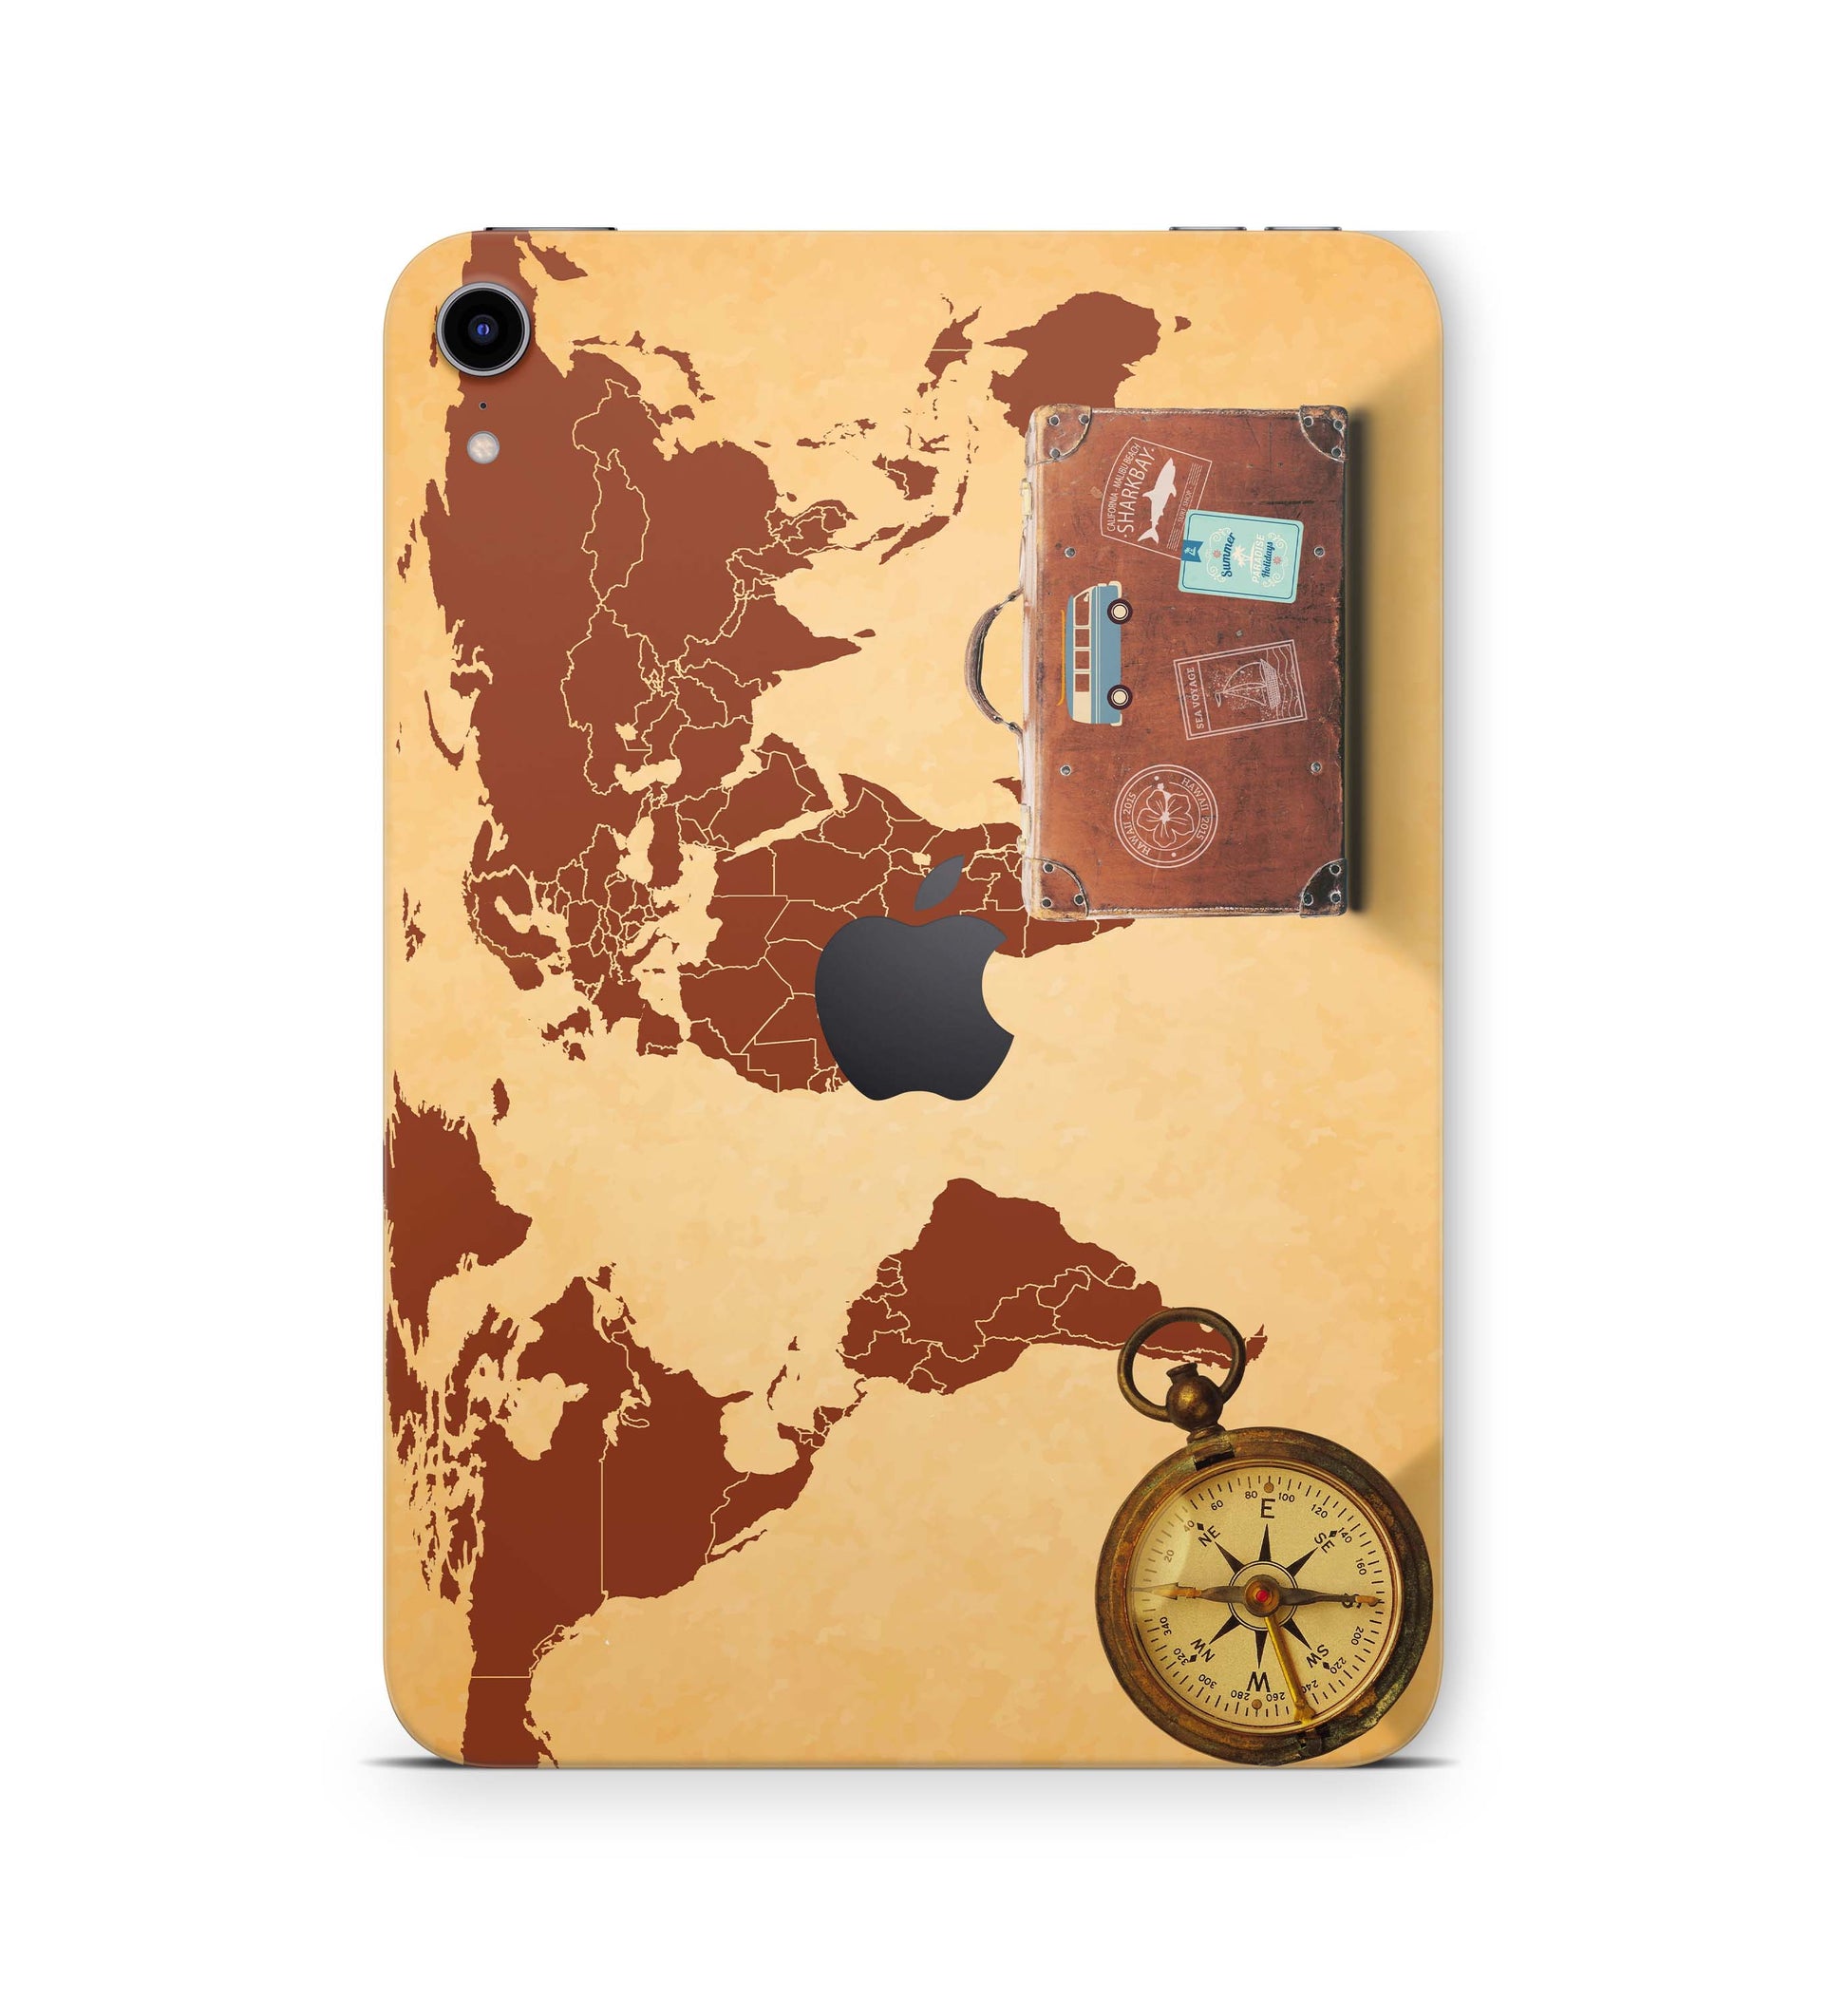 Apple iPad Skin Design Cover Folie Vinyl Skins & Wraps für alle iPad Modelle Aufkleber Skins4u Travel  